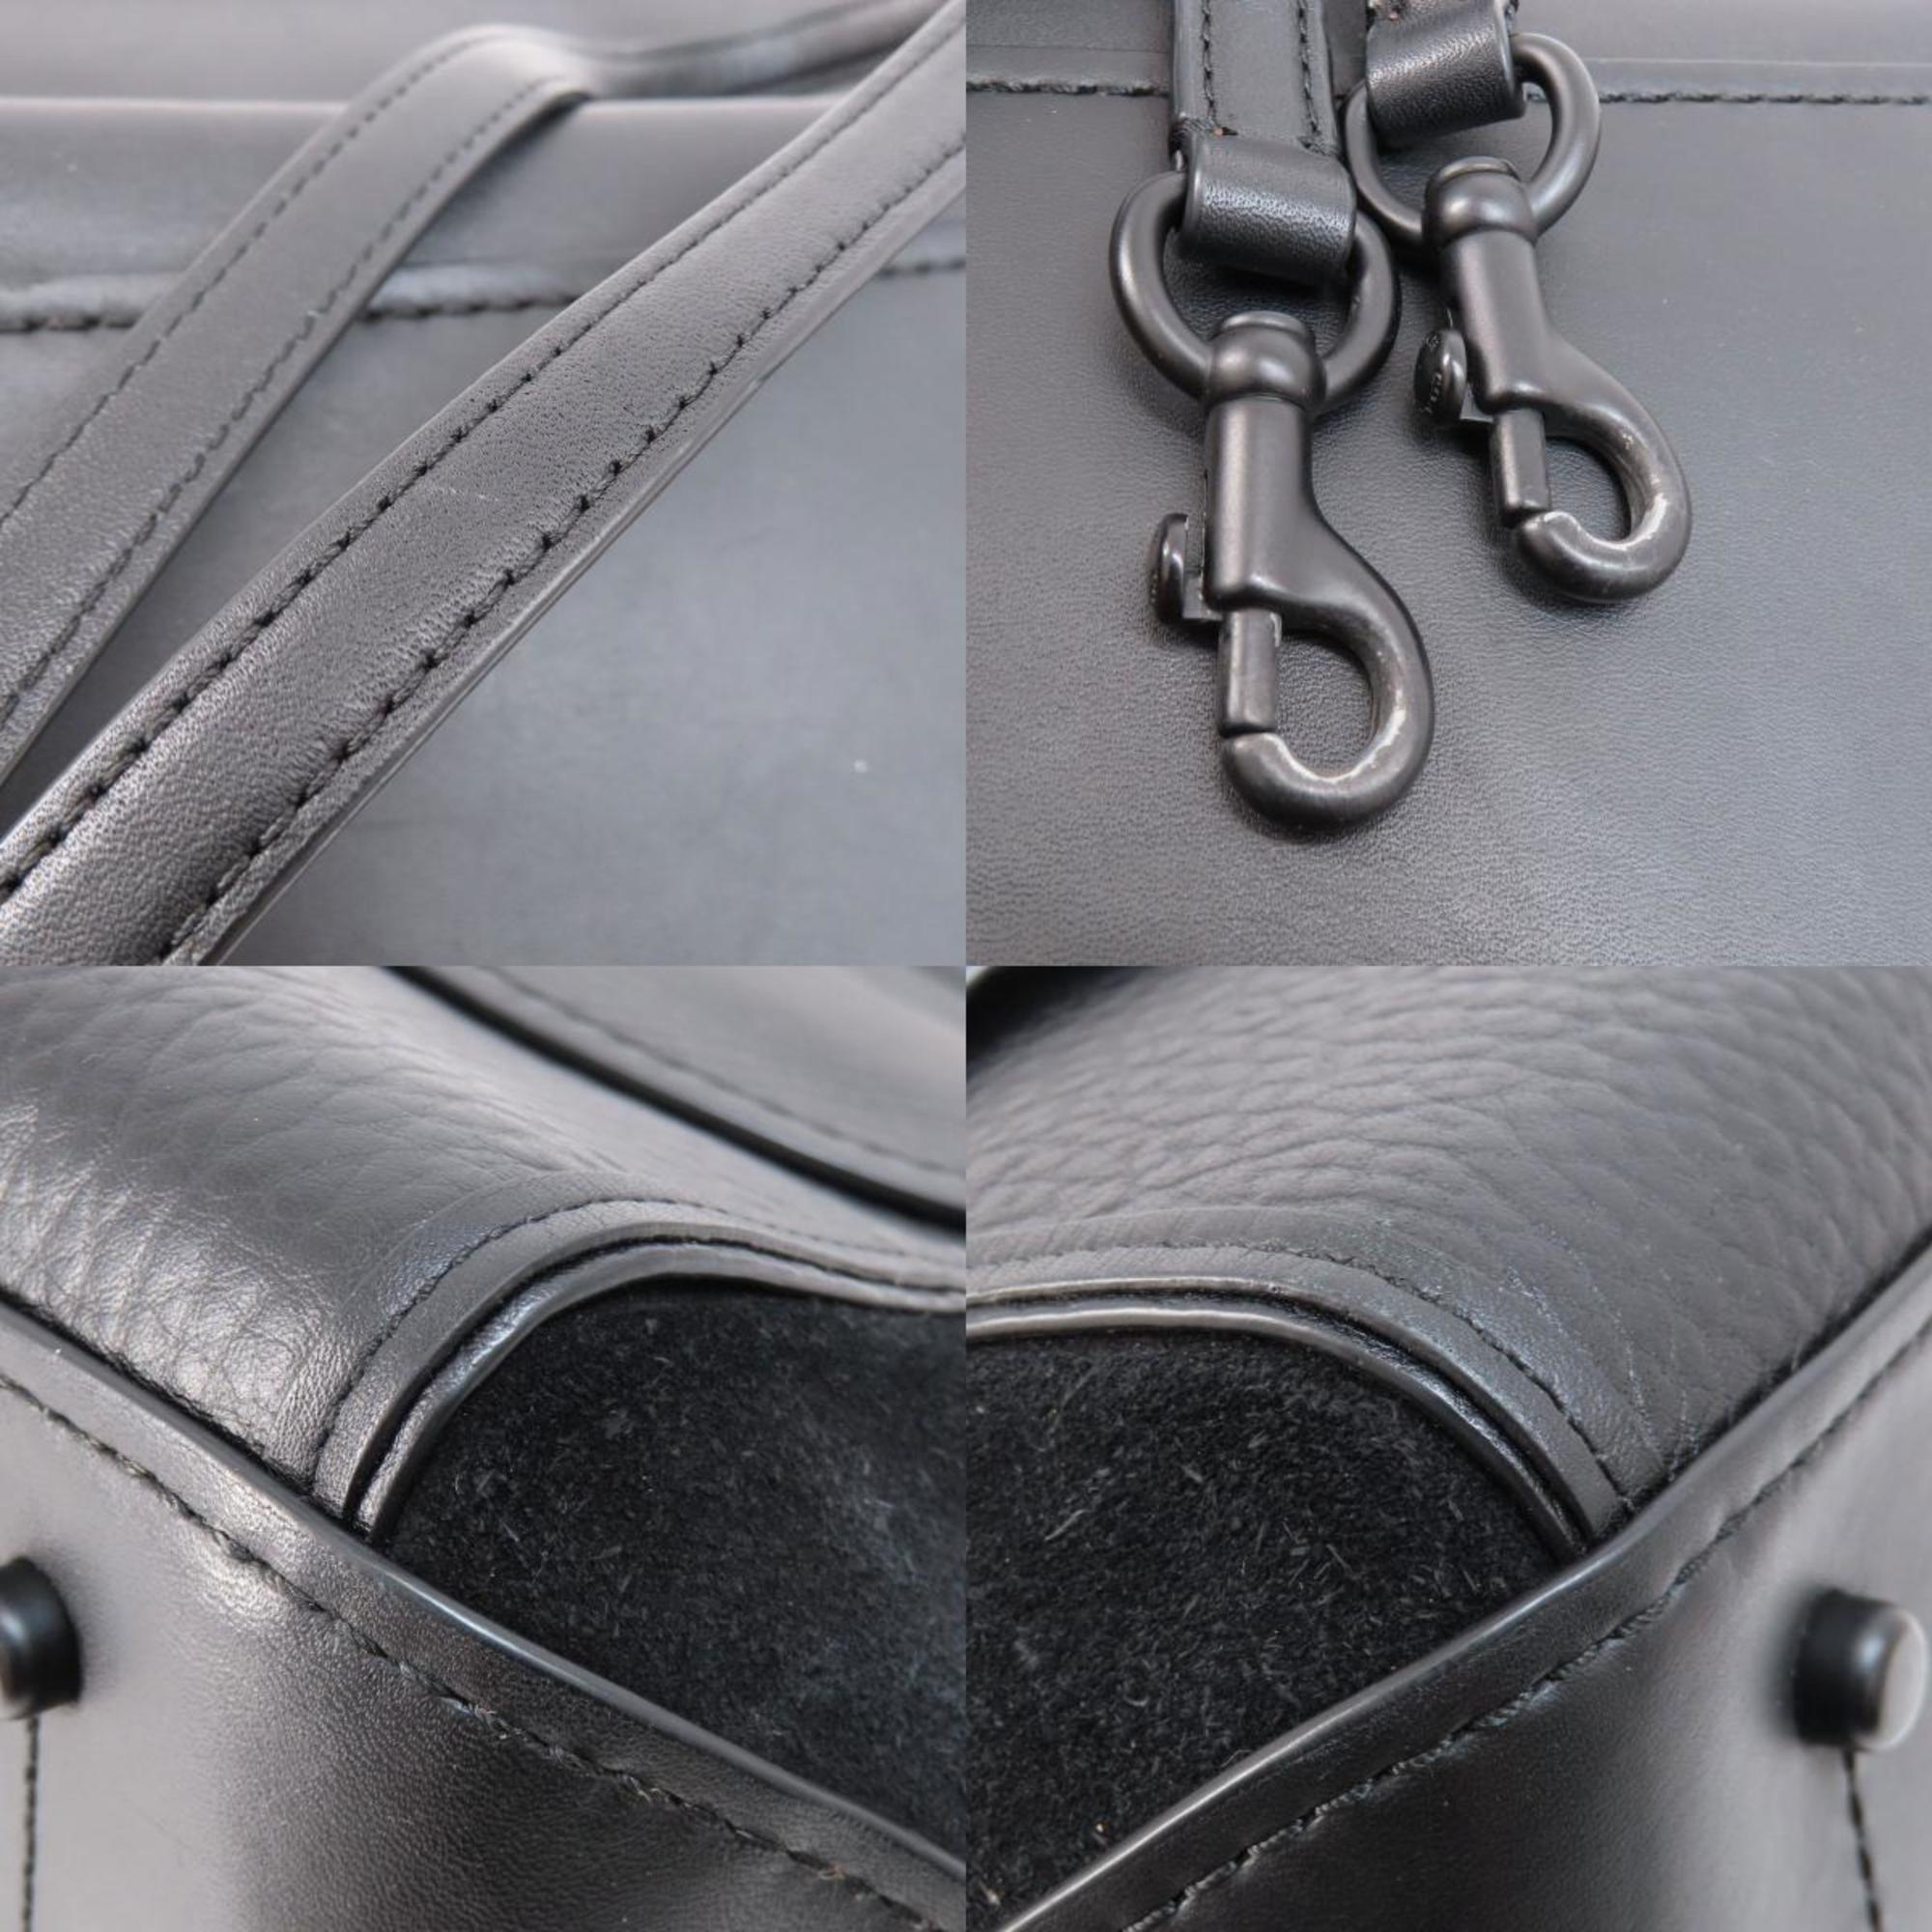 Coach 38389 handbag leather ladies